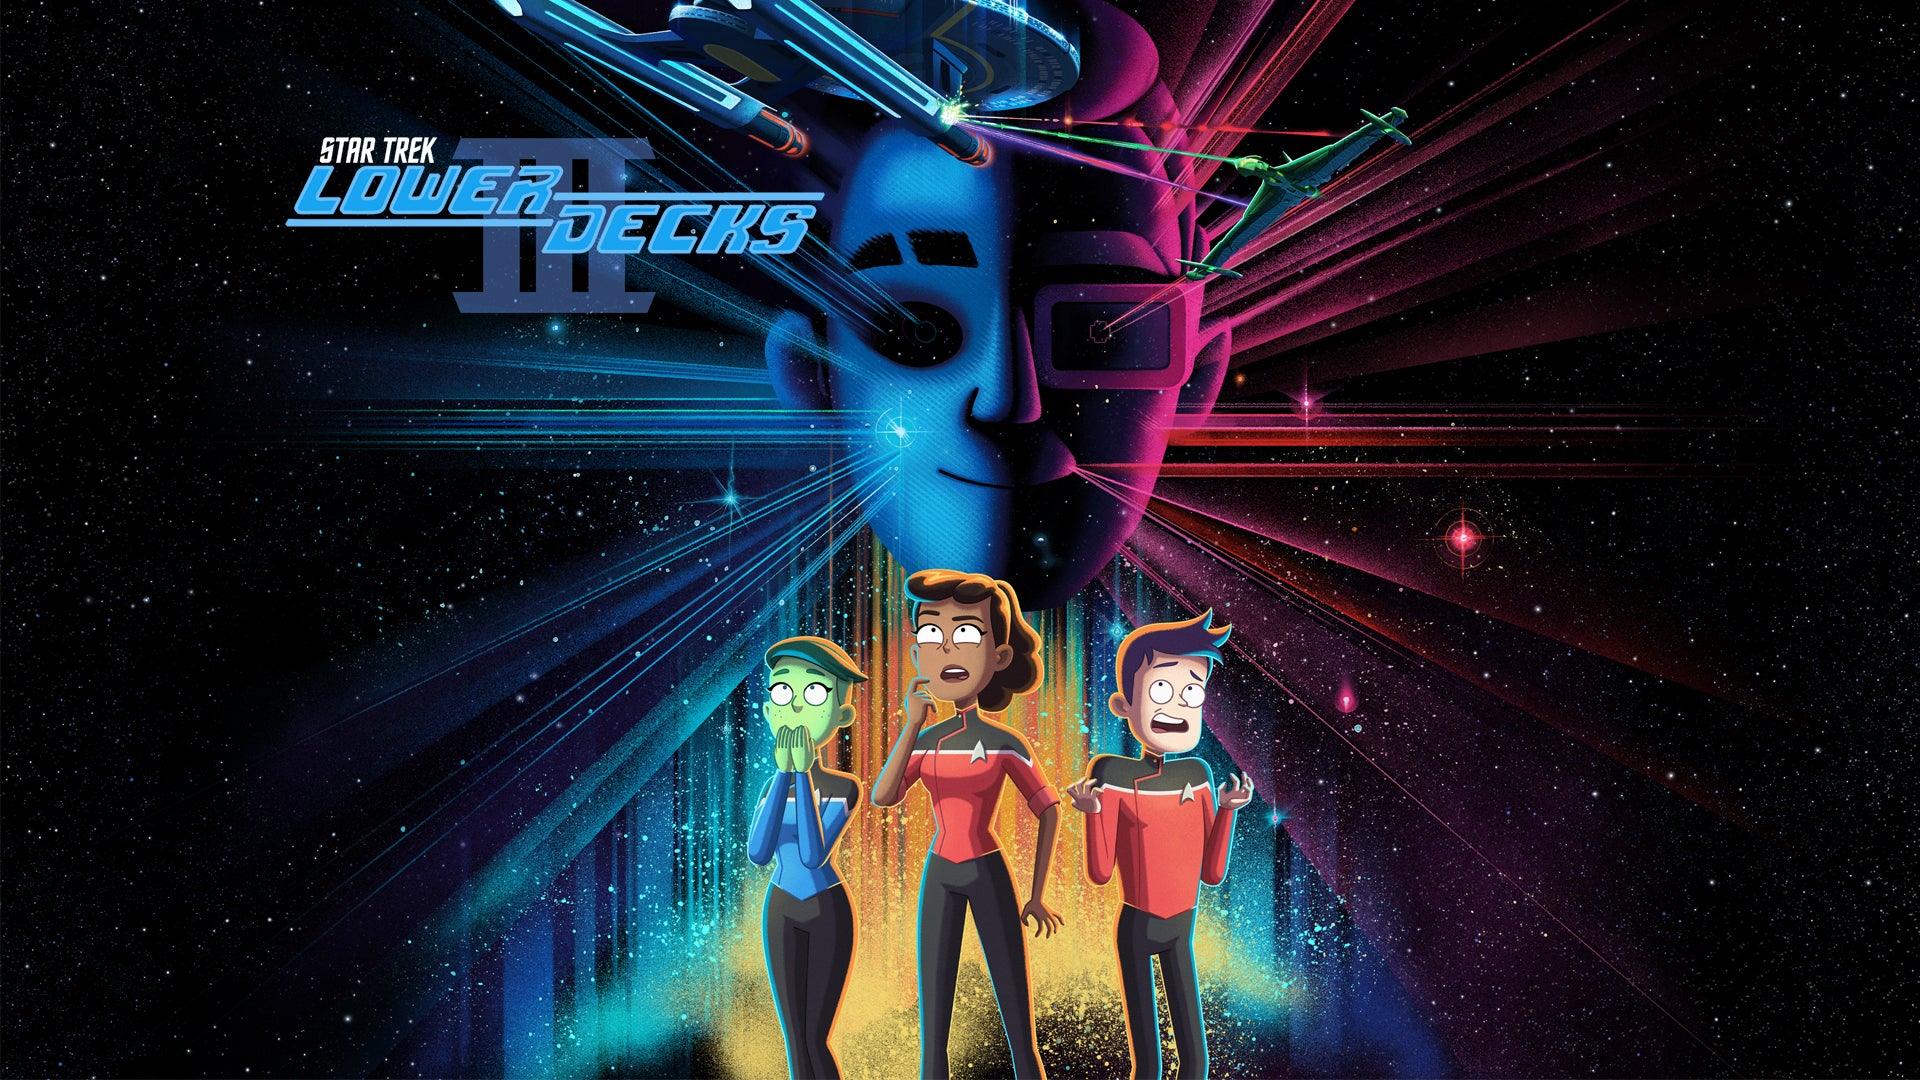 Star Trek: Lower Decks Returns with New Season on August 25